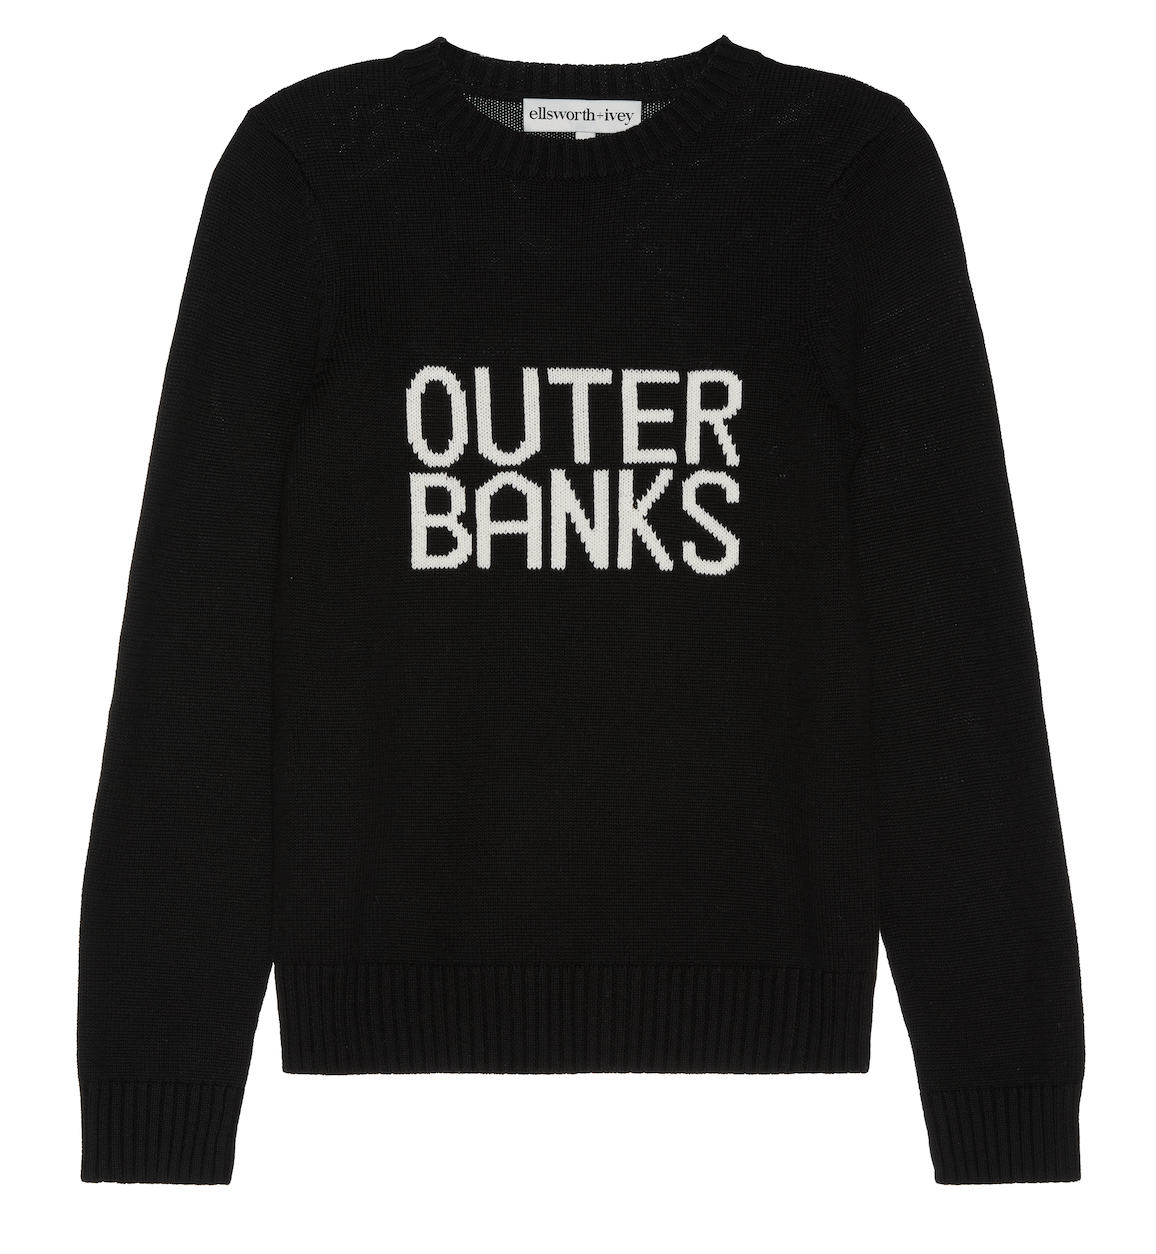 Outer Banks Sweater | Ellsworth + Ivey | Wolf & Badger